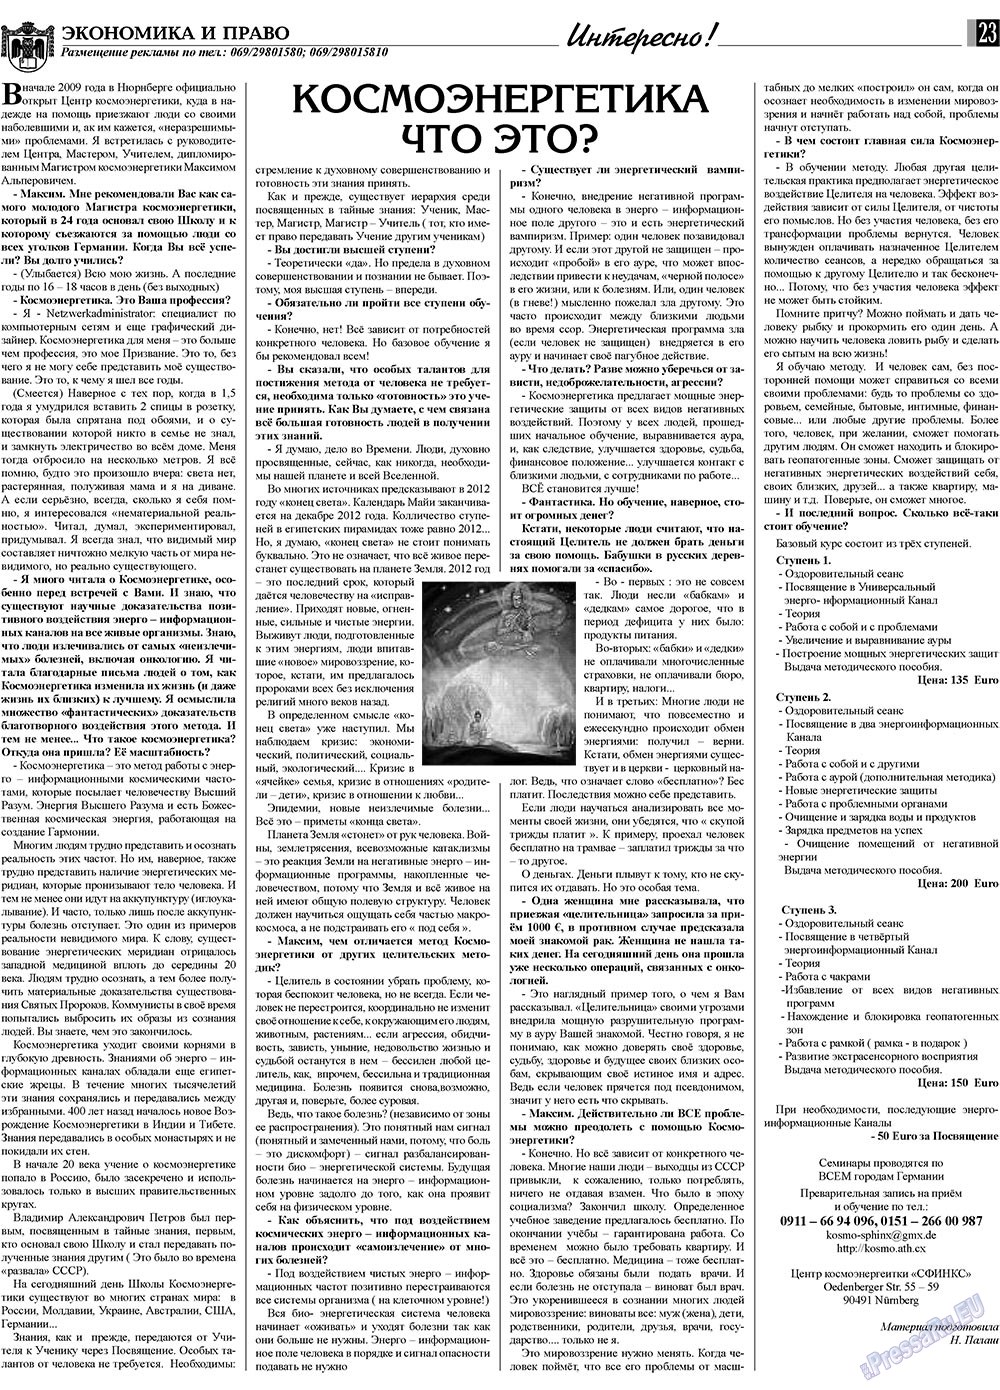 Ekonomika i pravo (Zeitung). 2009 Jahr, Ausgabe 12, Seite 23